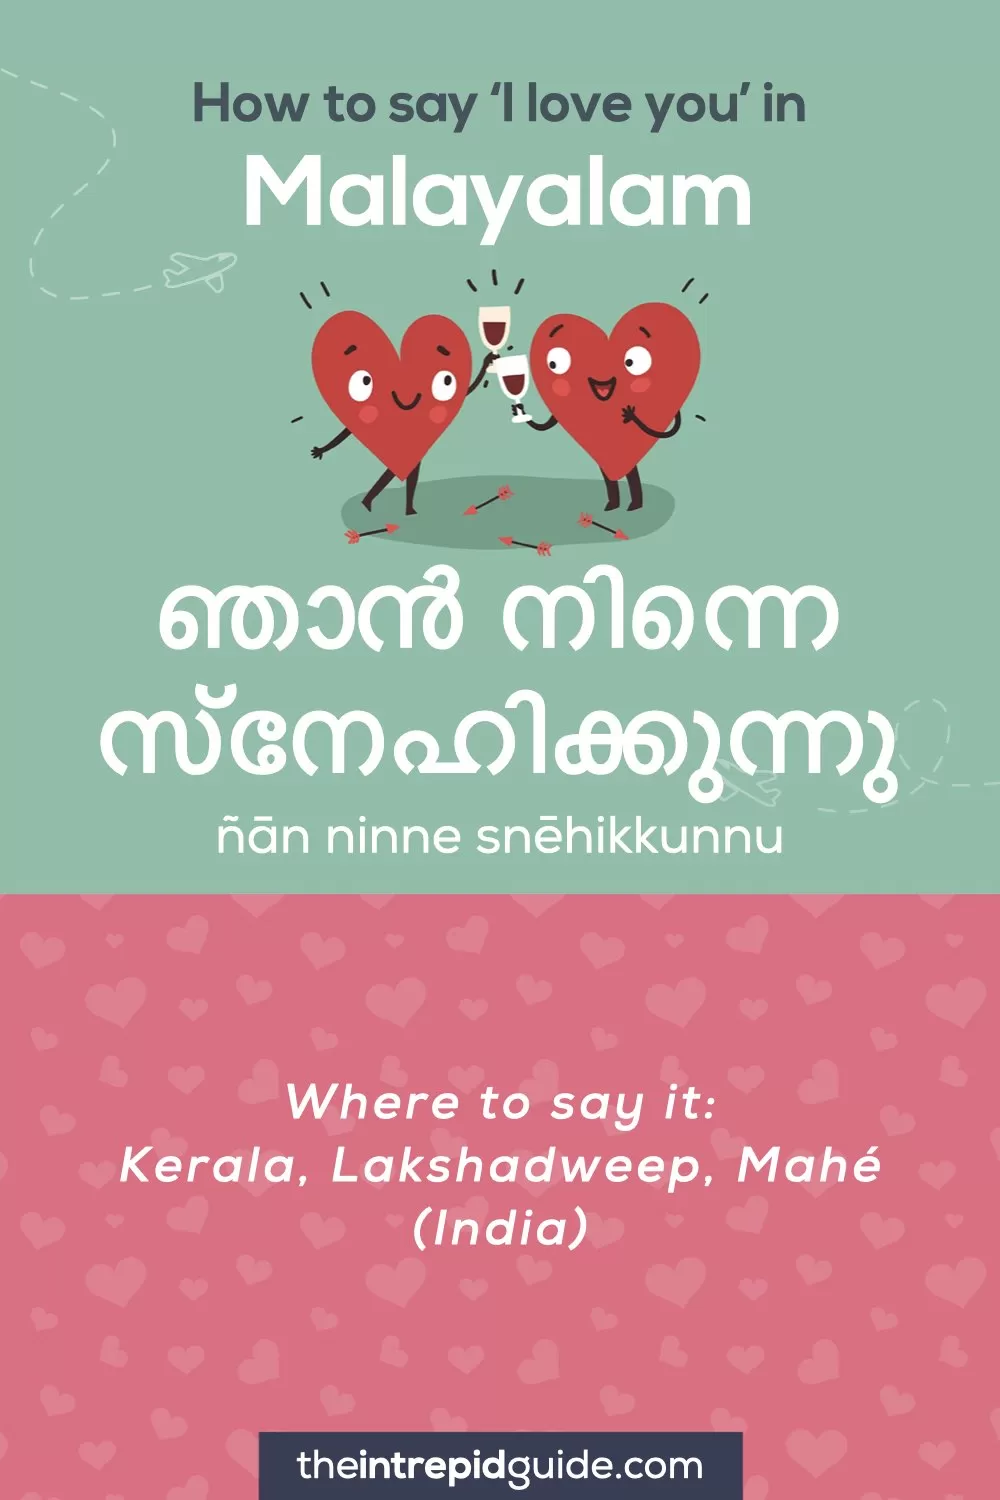 How to say I love you in different languages - Malayalam - ഞാൻ നിന്നെ സ്നേഹിക്കുന്നു